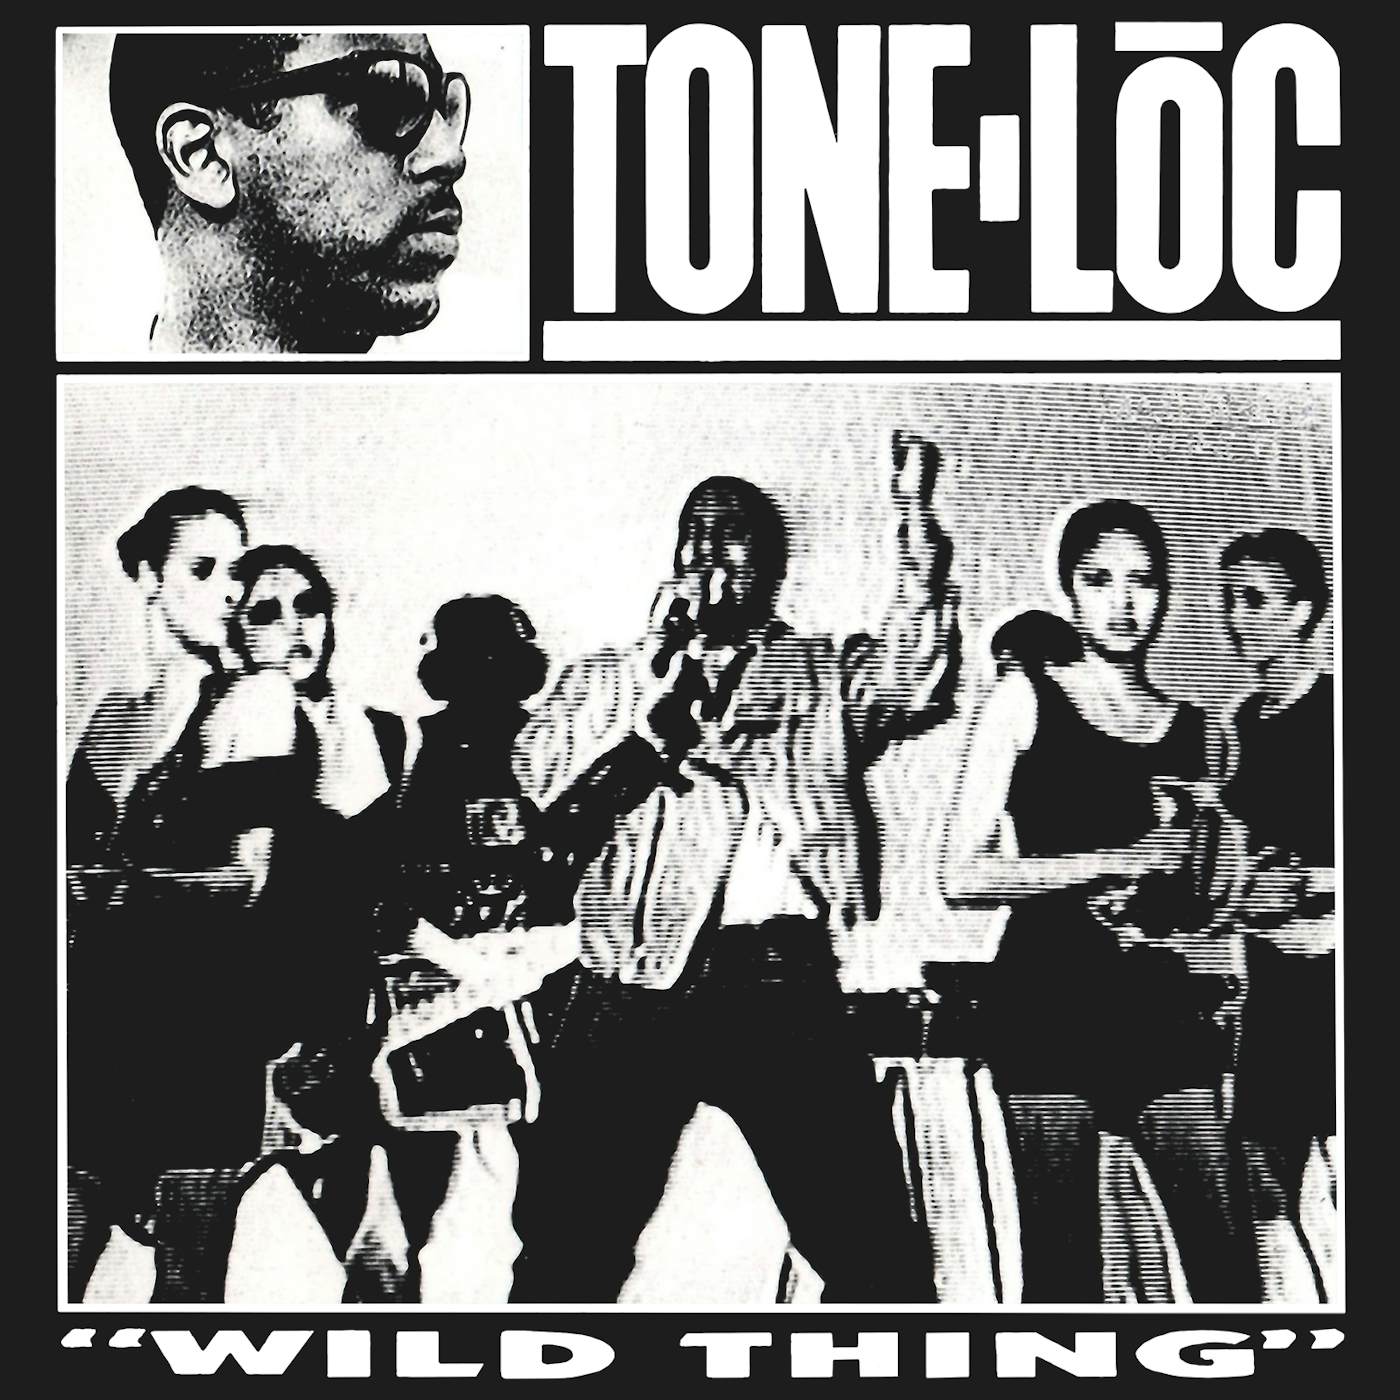 Tone-Loc T-Shirt | Wild Thing Tone Loc Shirt